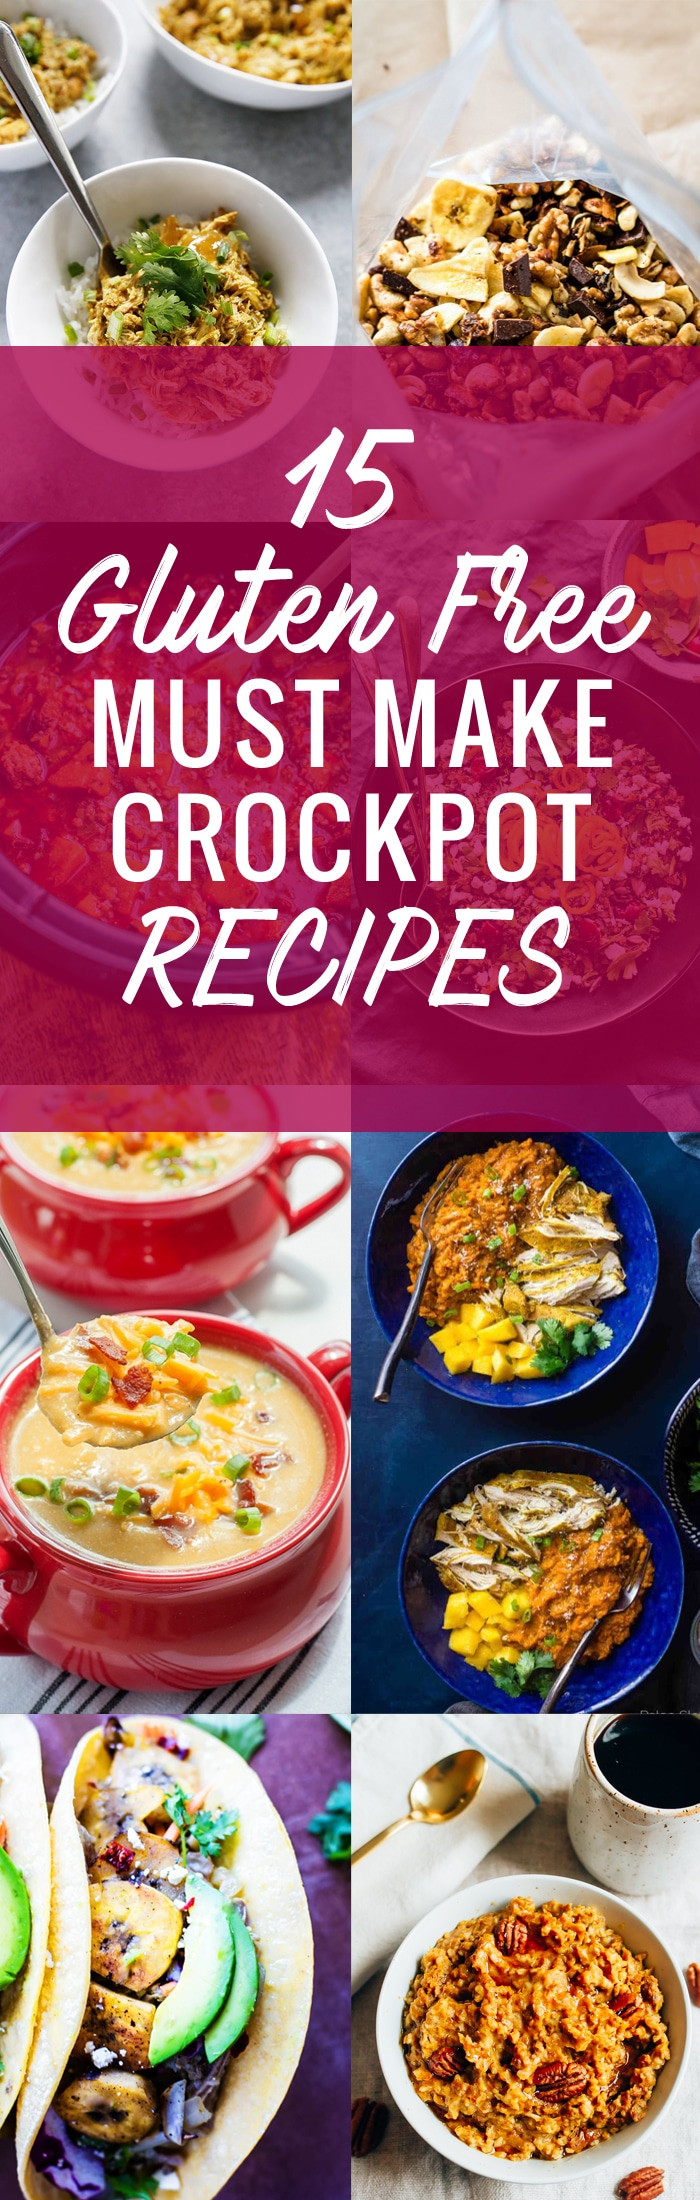 Gluten And Dairy Free Crockpot Recipes
 15 Gluten Free MUST MAKE Crock Pot Recipes